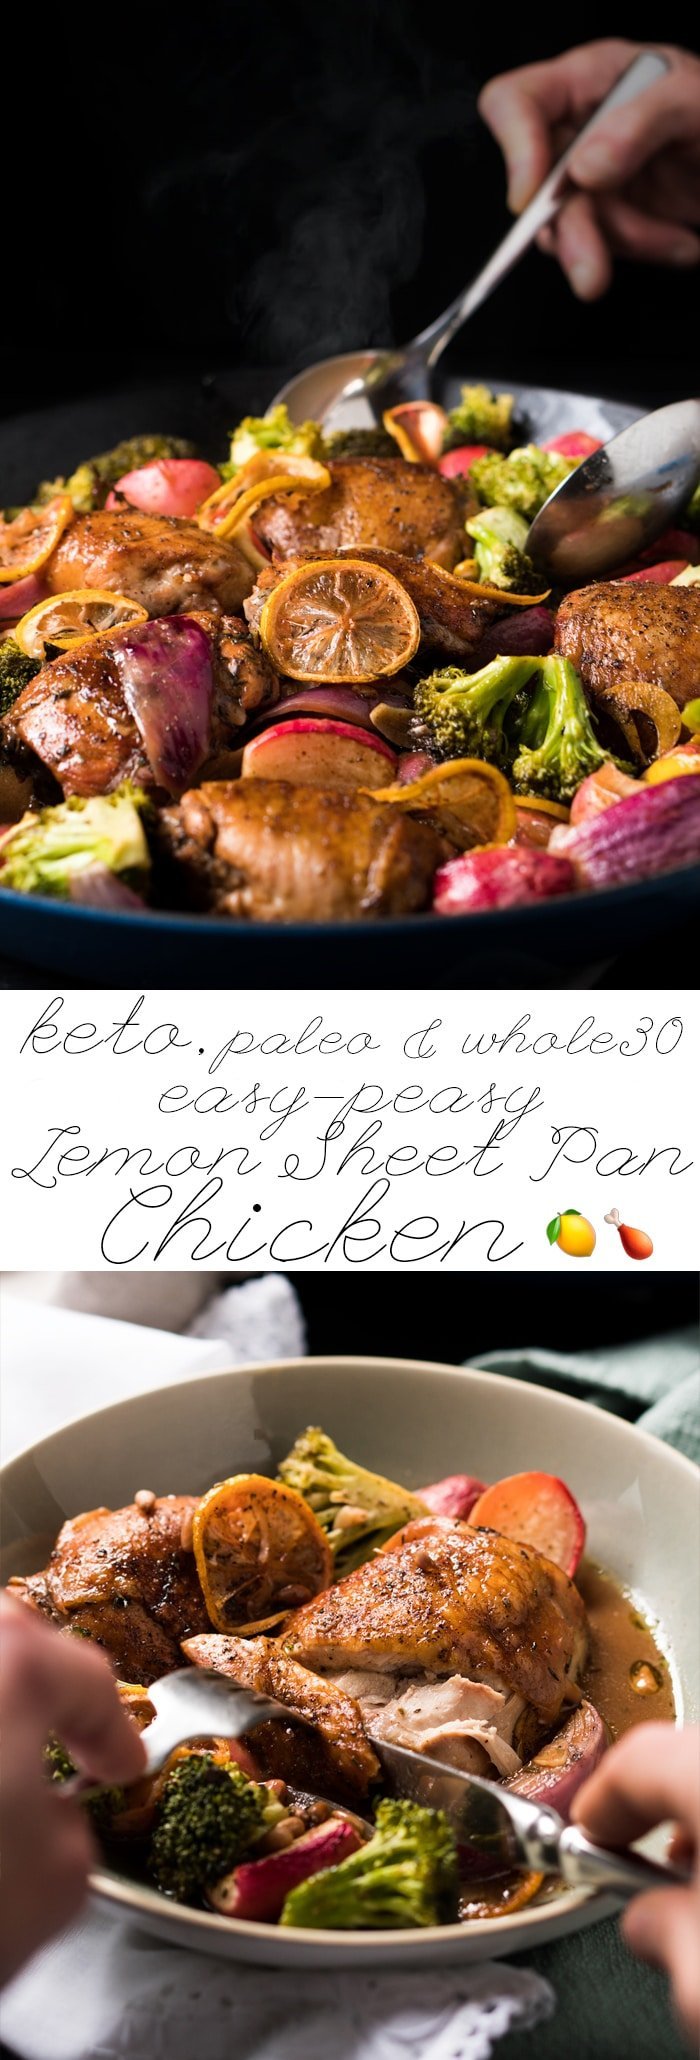 Paleo, Whole30 & Keto Sheet Pan Chicken 🍗 With lemon and plenty of low carb veggies! #ketochicken #ketodinner #ketosheetpan